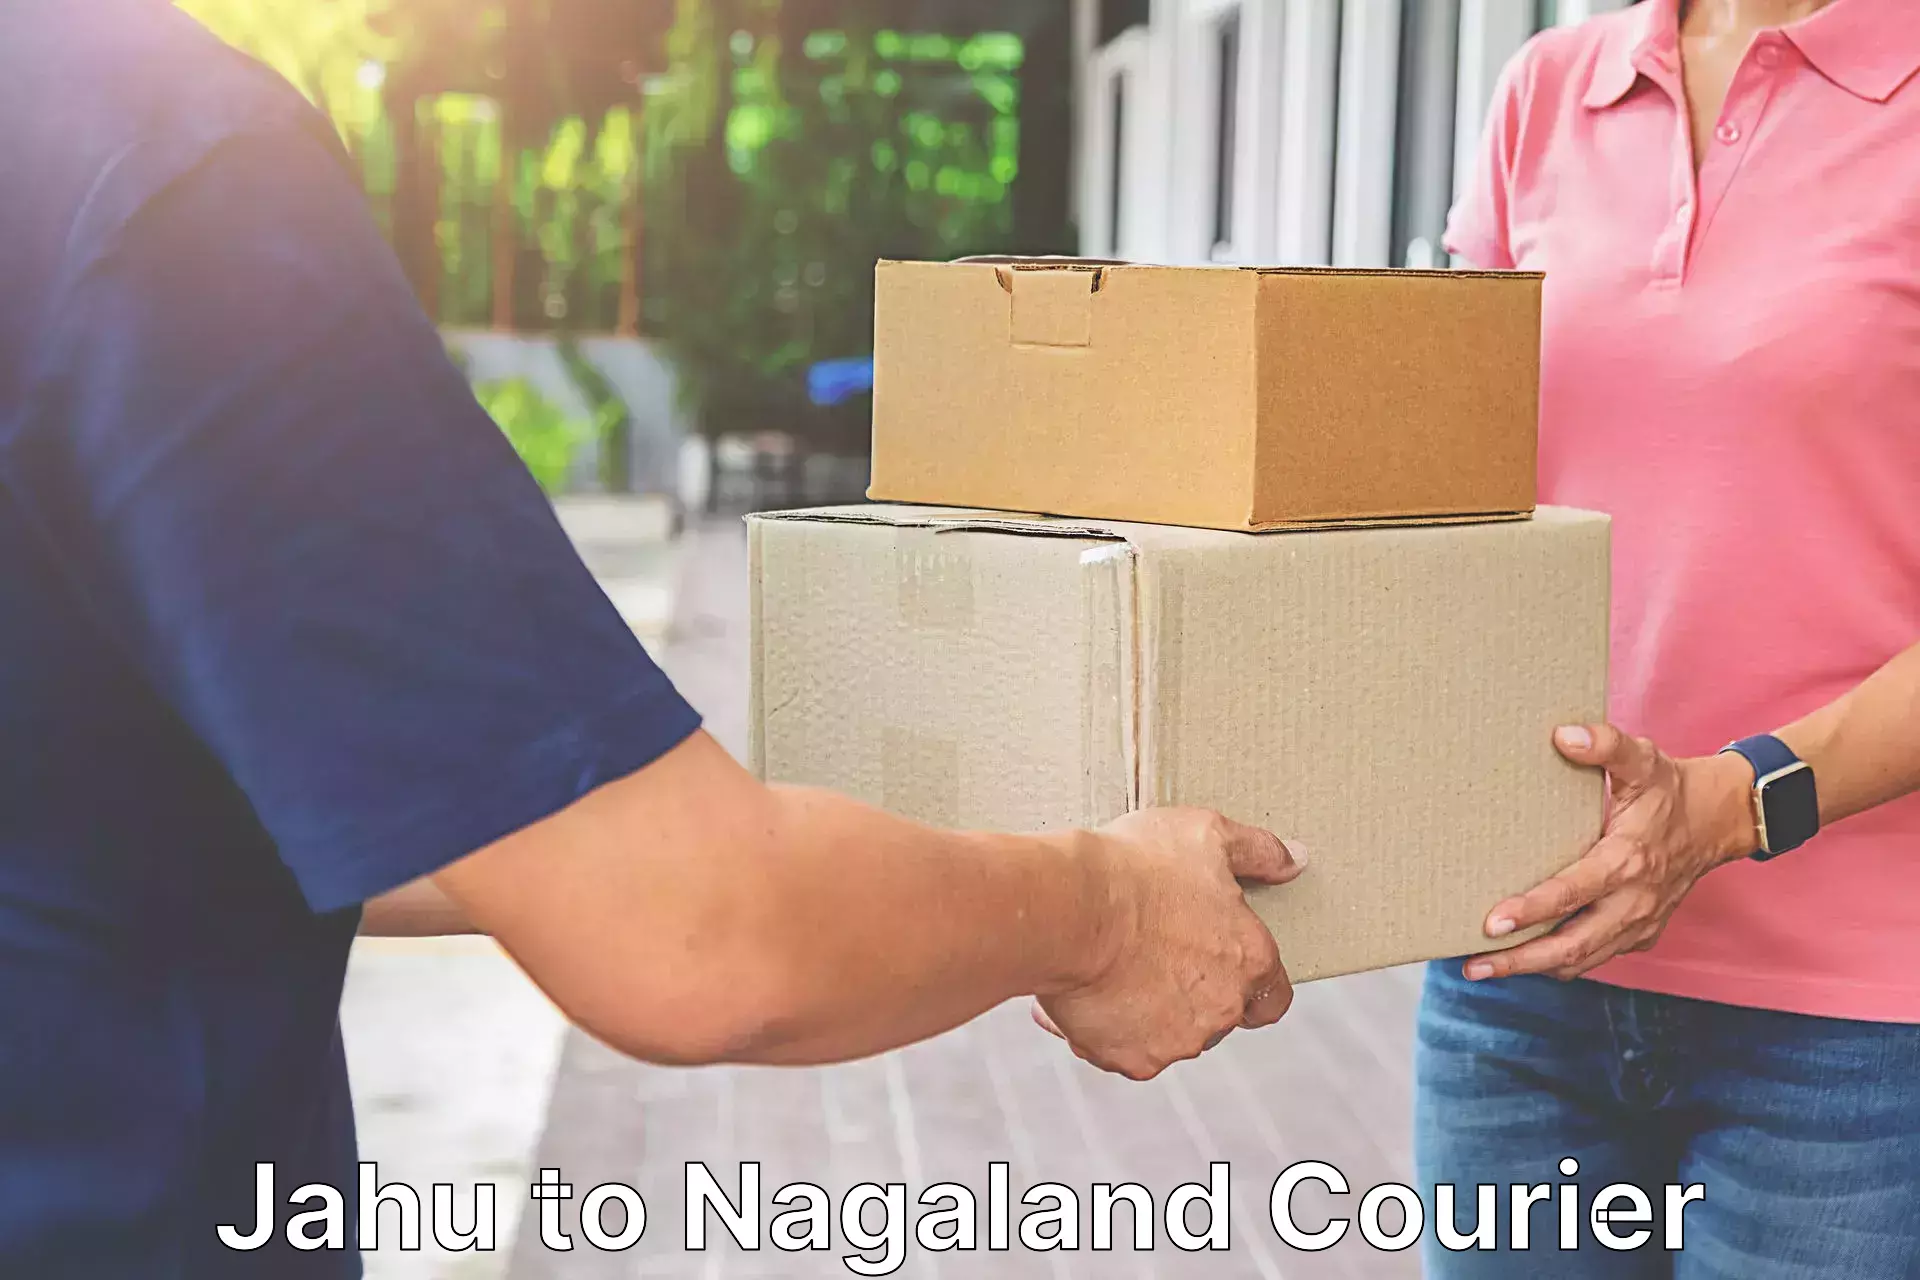 Express courier facilities Jahu to Nagaland